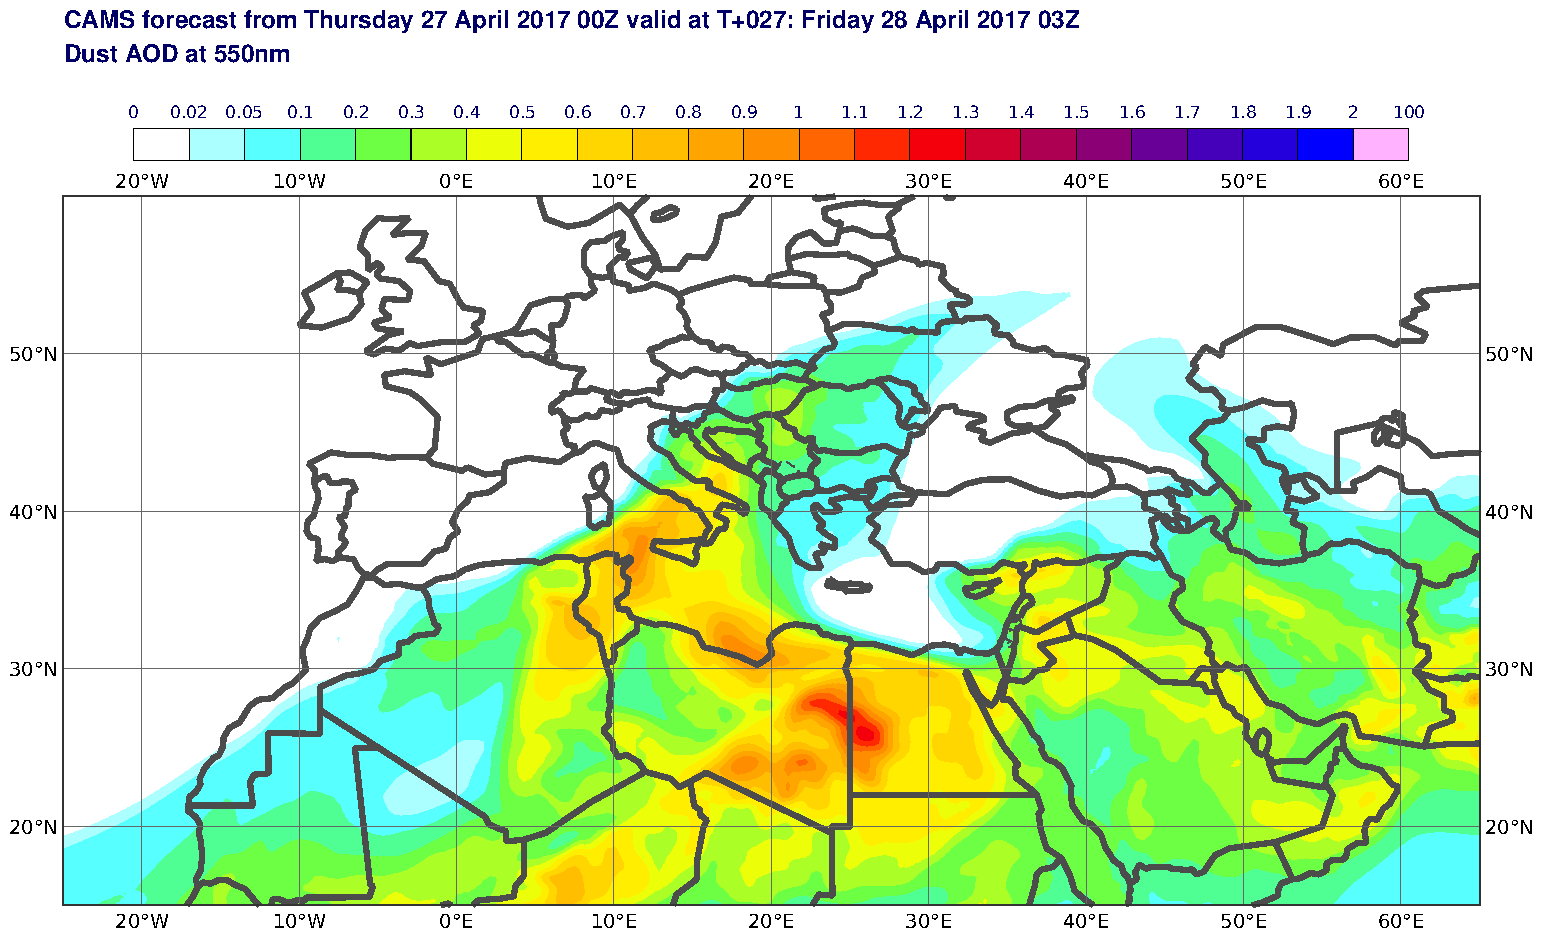 Dust AOD at 550nm valid at T27 - 2017-04-28 03:00